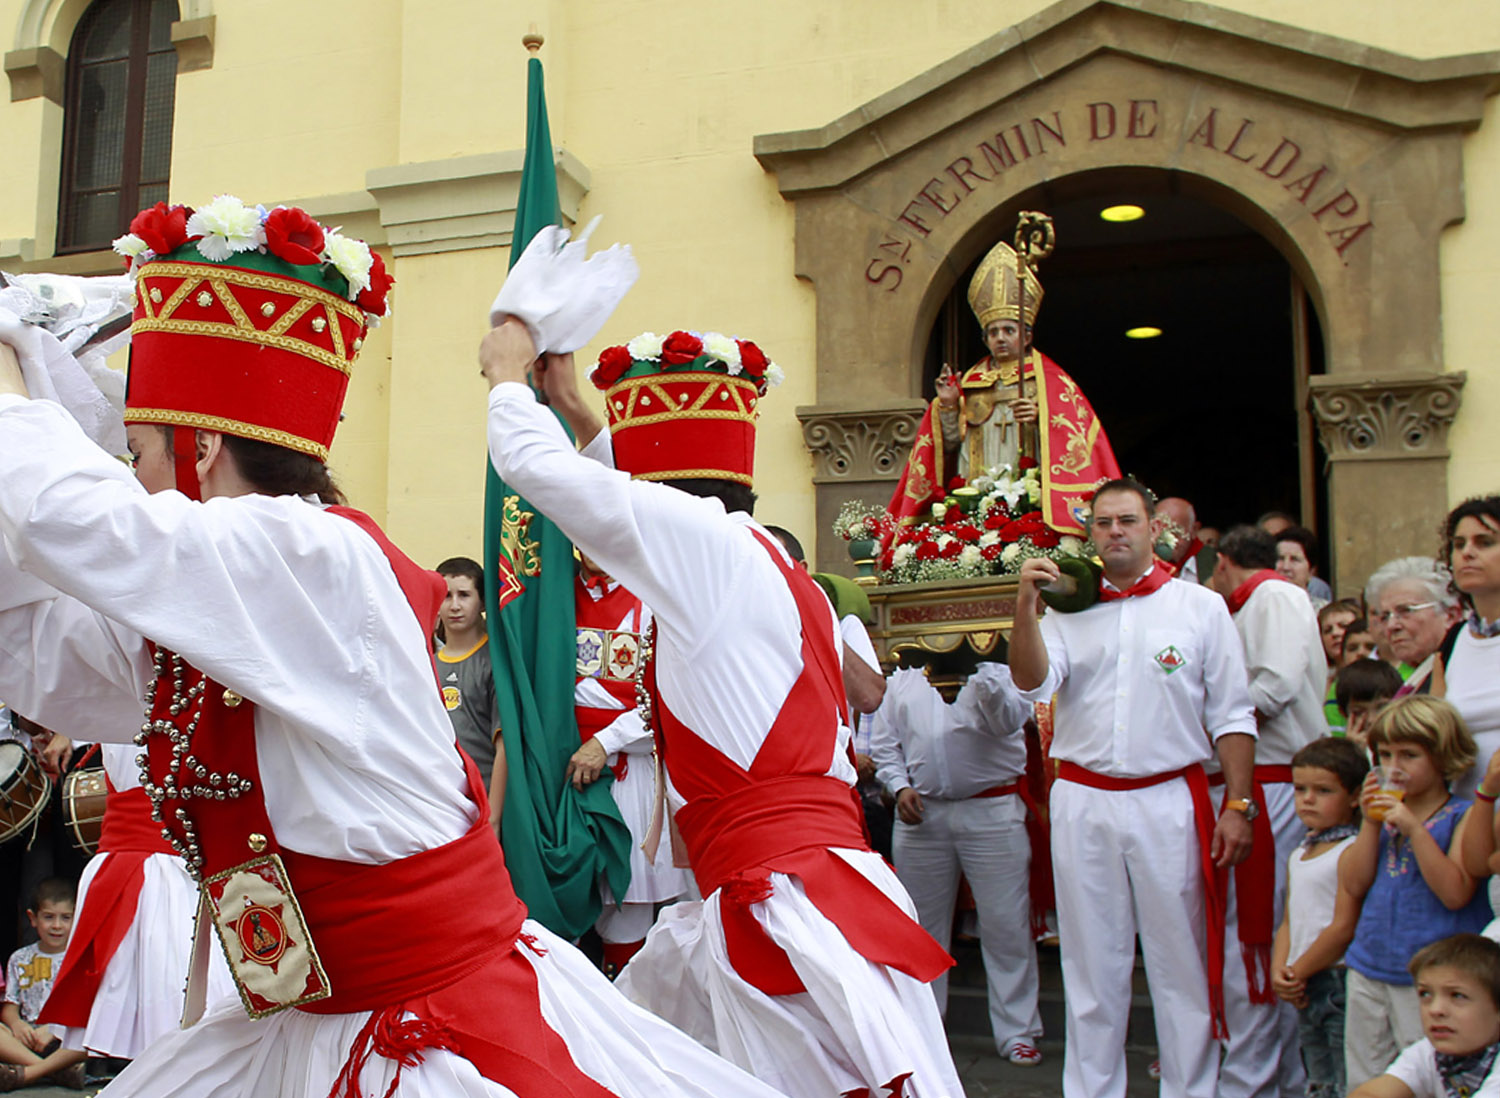 Dantzaris bailando a San Fermín en el exterior de la iglesia de San Fermín de Aldapa